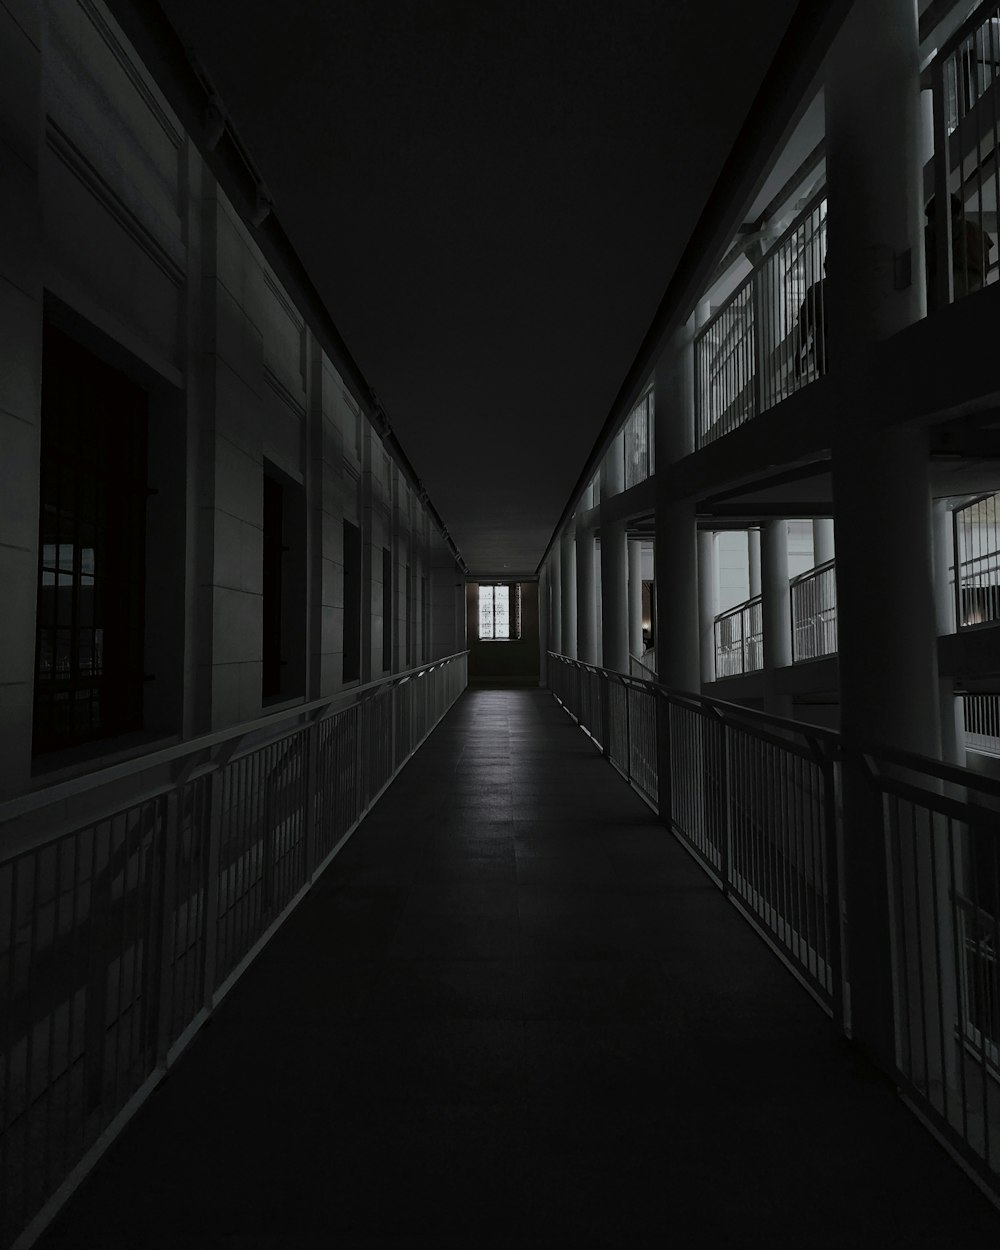 a long dark hallway with windows and railings